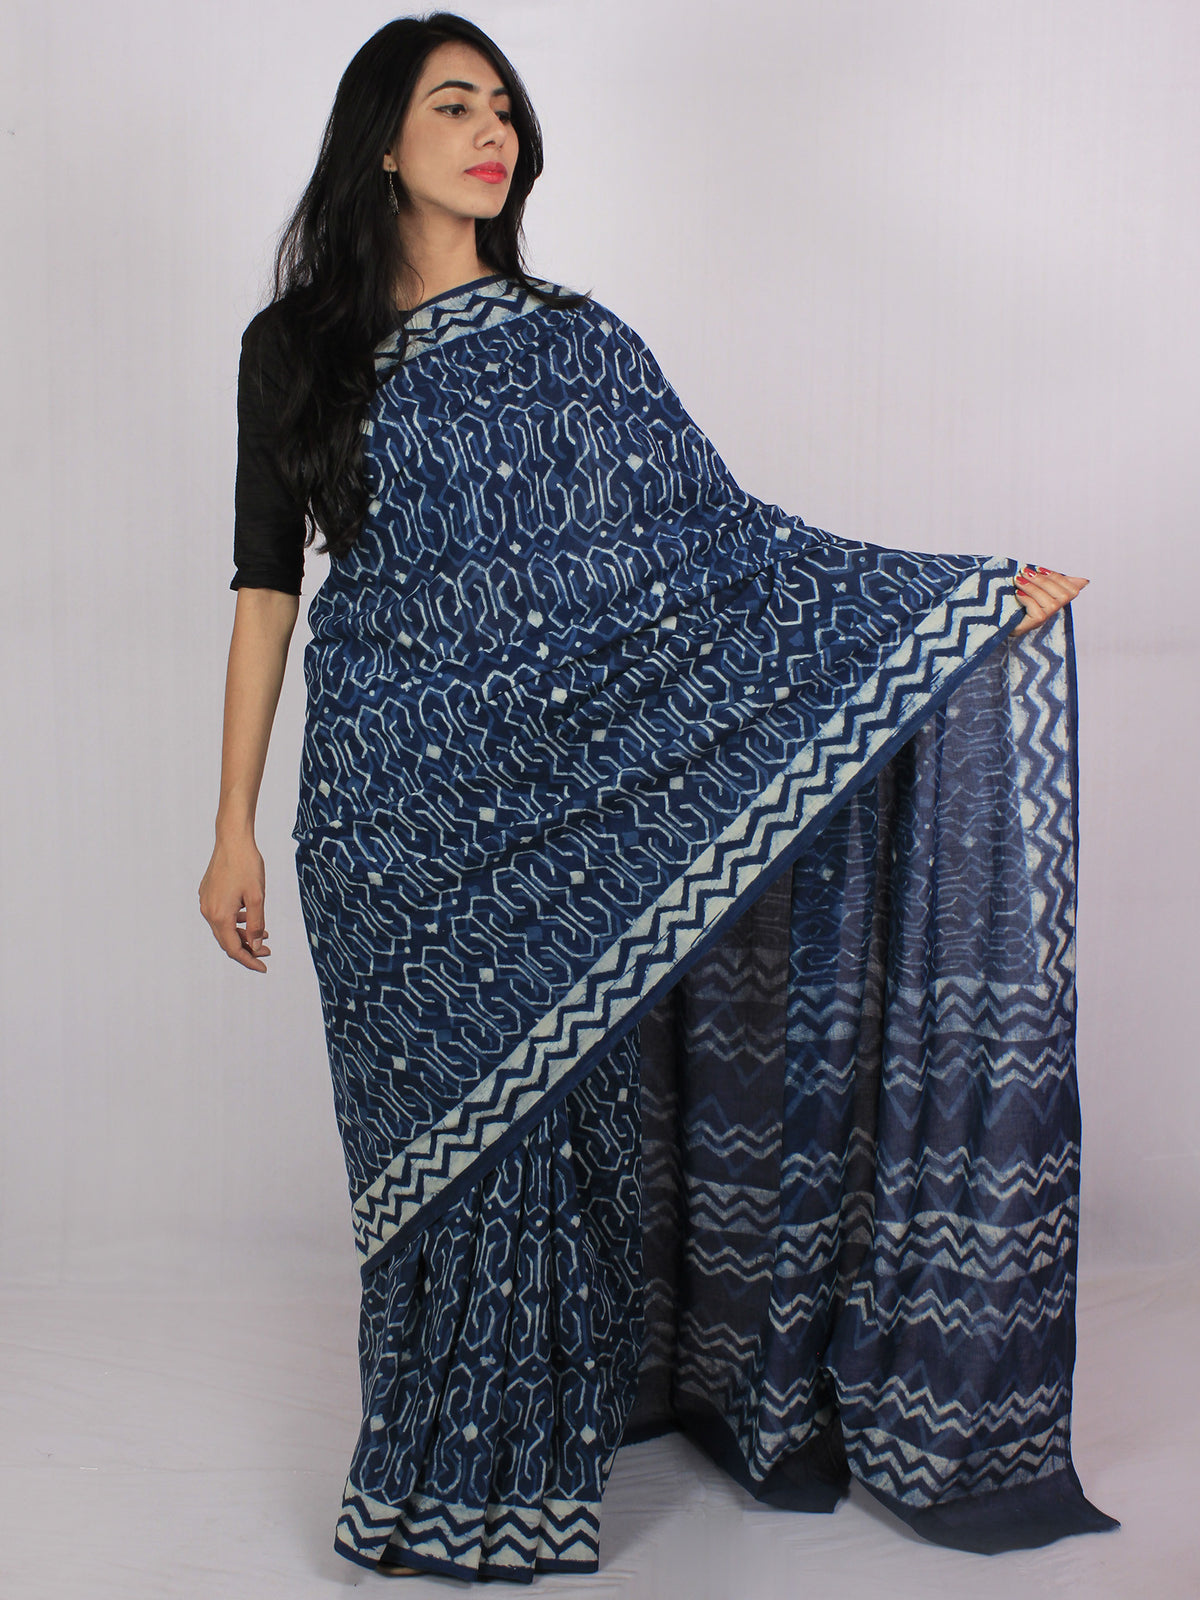 Indigo Ivory Blue Cotton Hand Block Printed Saree in Natural Colors - S031701190